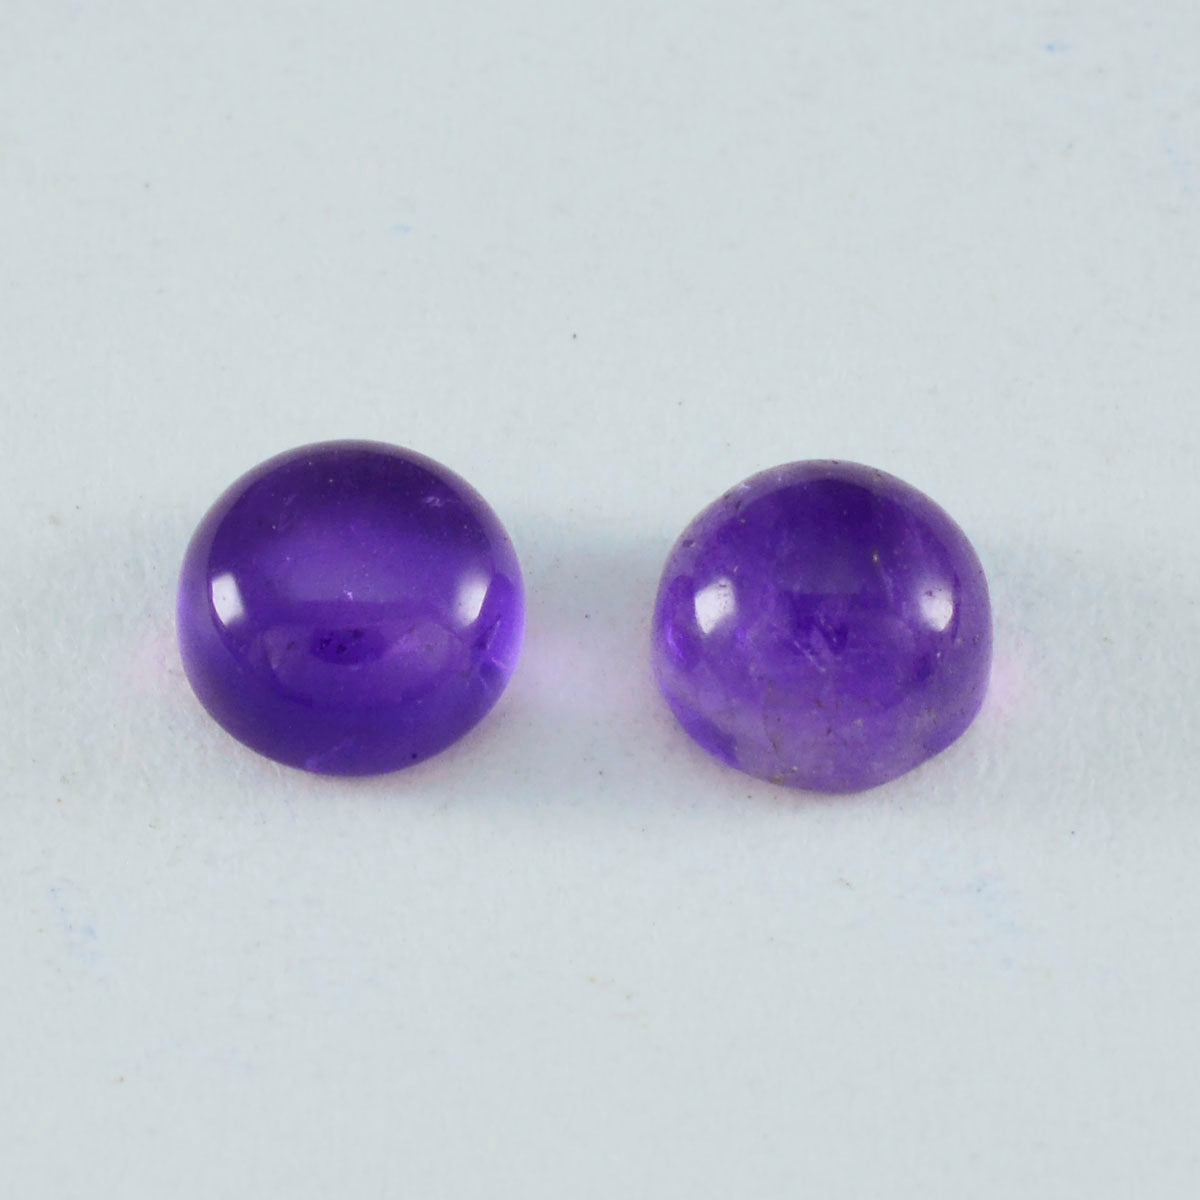 Riyogems 1PC Purple Amethyst Cabochon 7x7 mm Round Shape amazing Quality Loose Gemstone